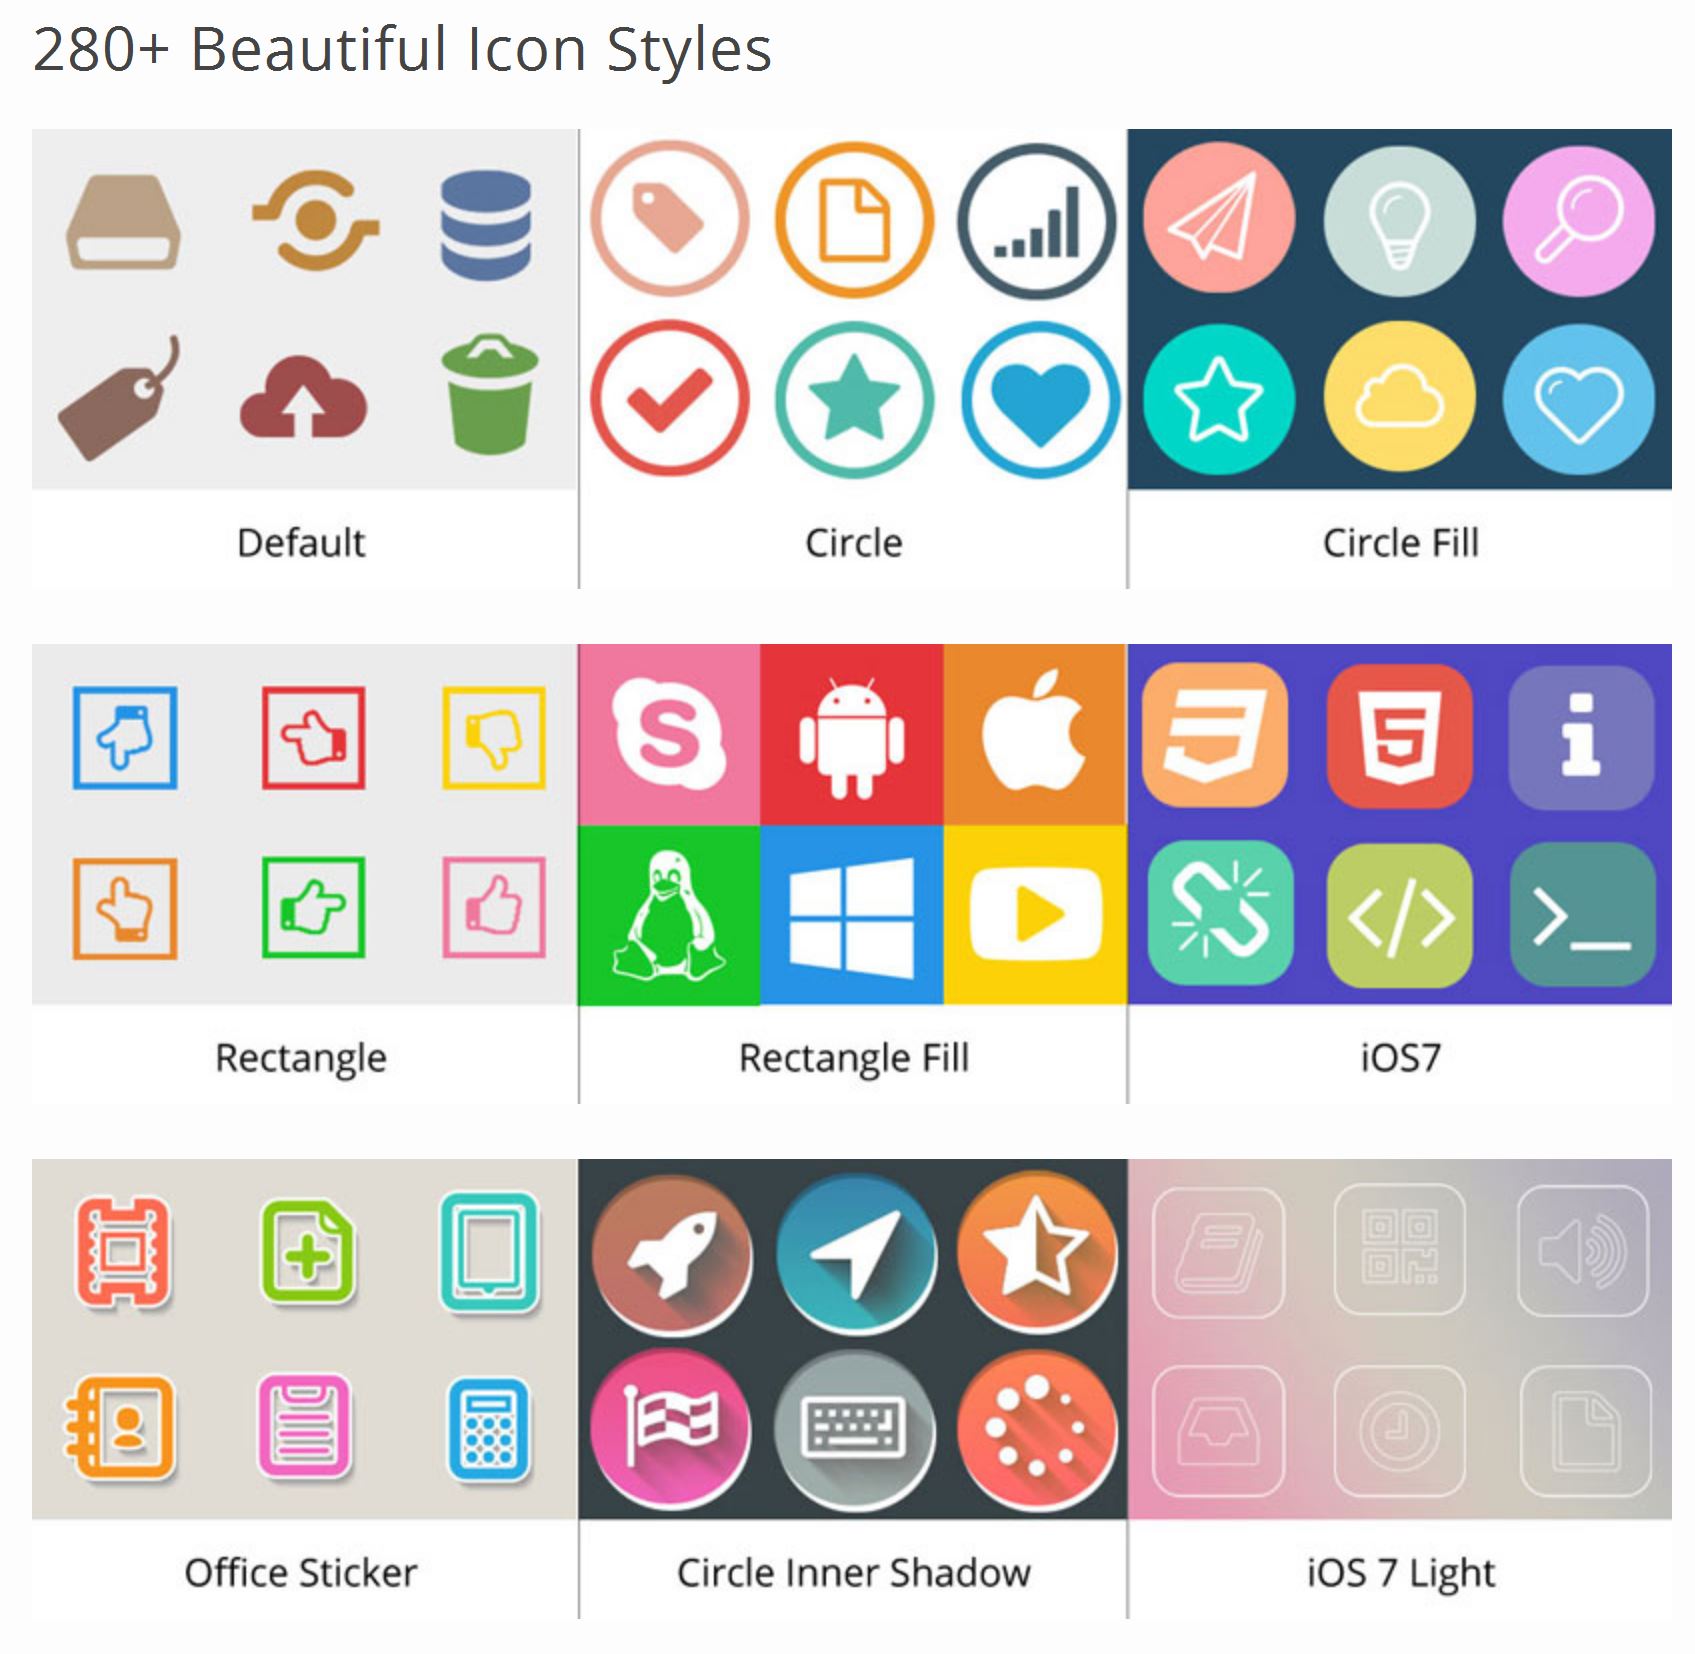 iOS App Icon Kit by Medialoot - Dribbble